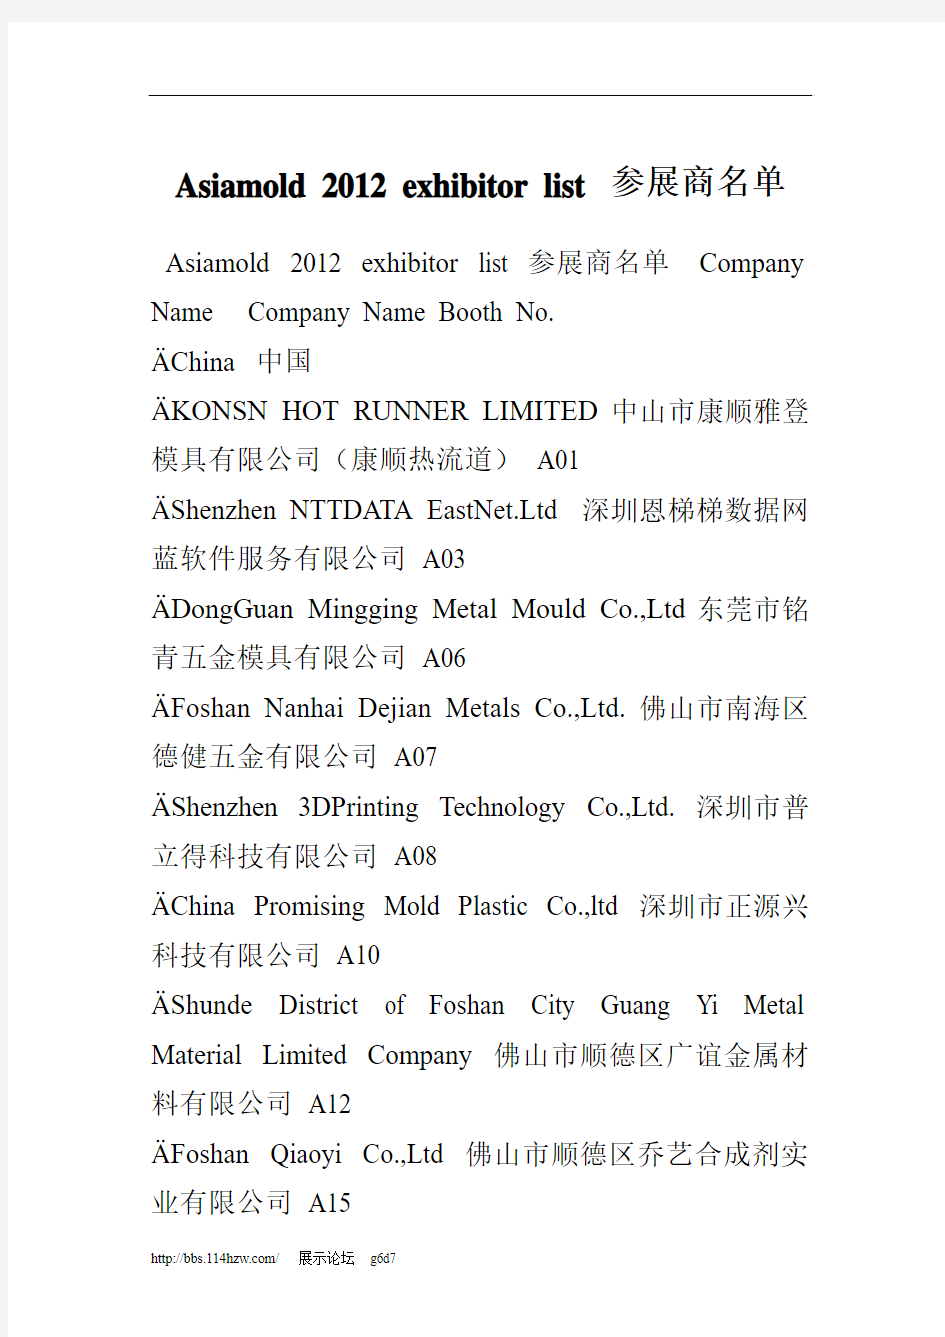 Asiamold 2012 exhibitor list